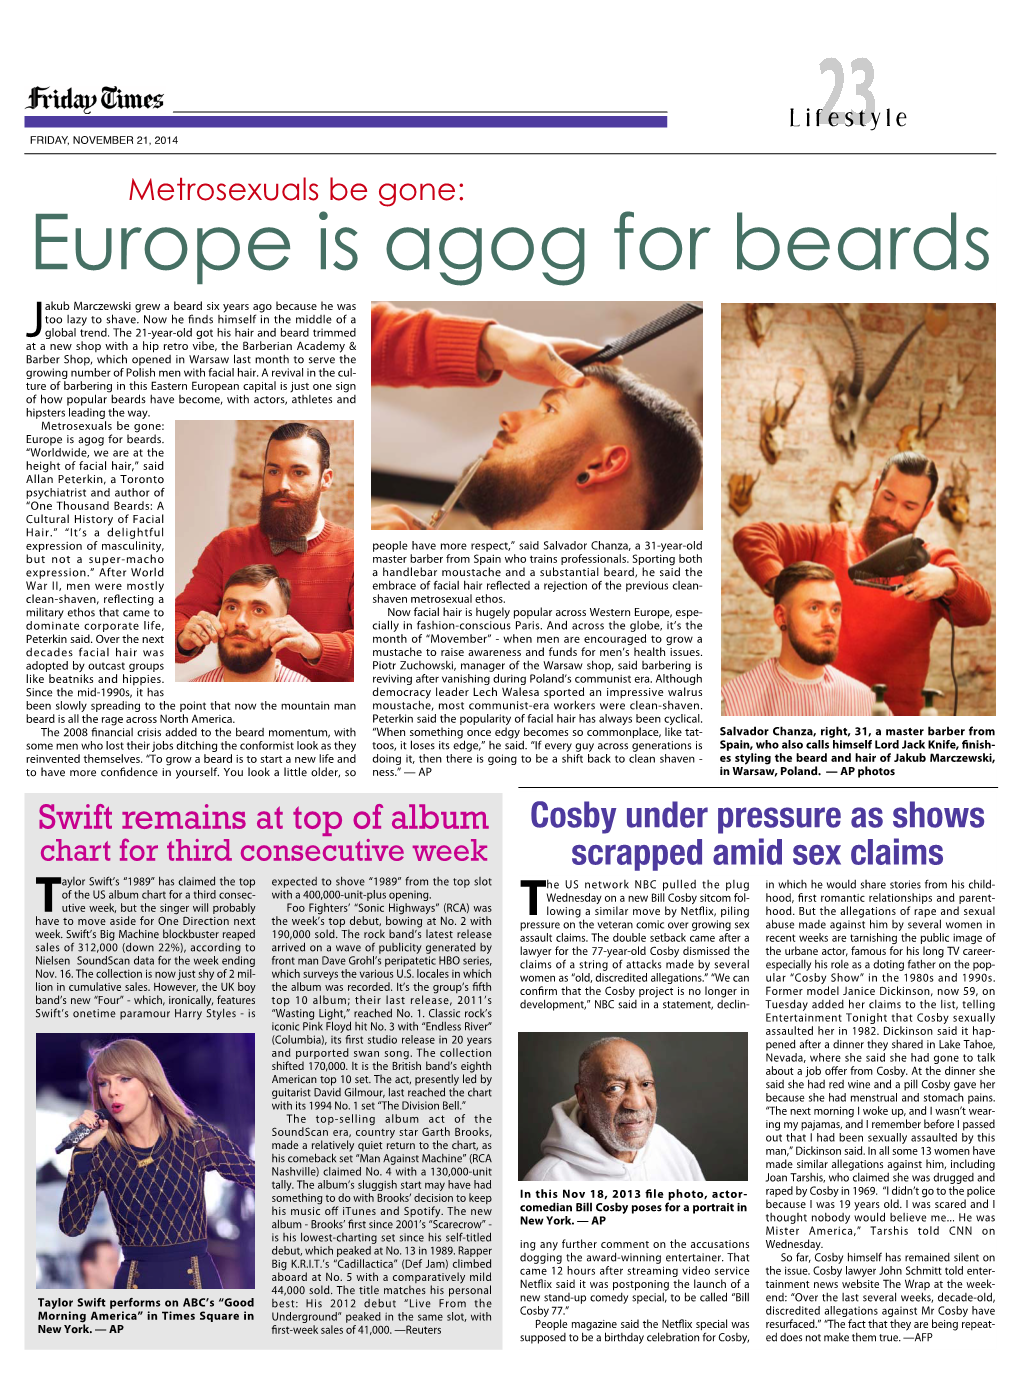 Europe Is Agog for Beards